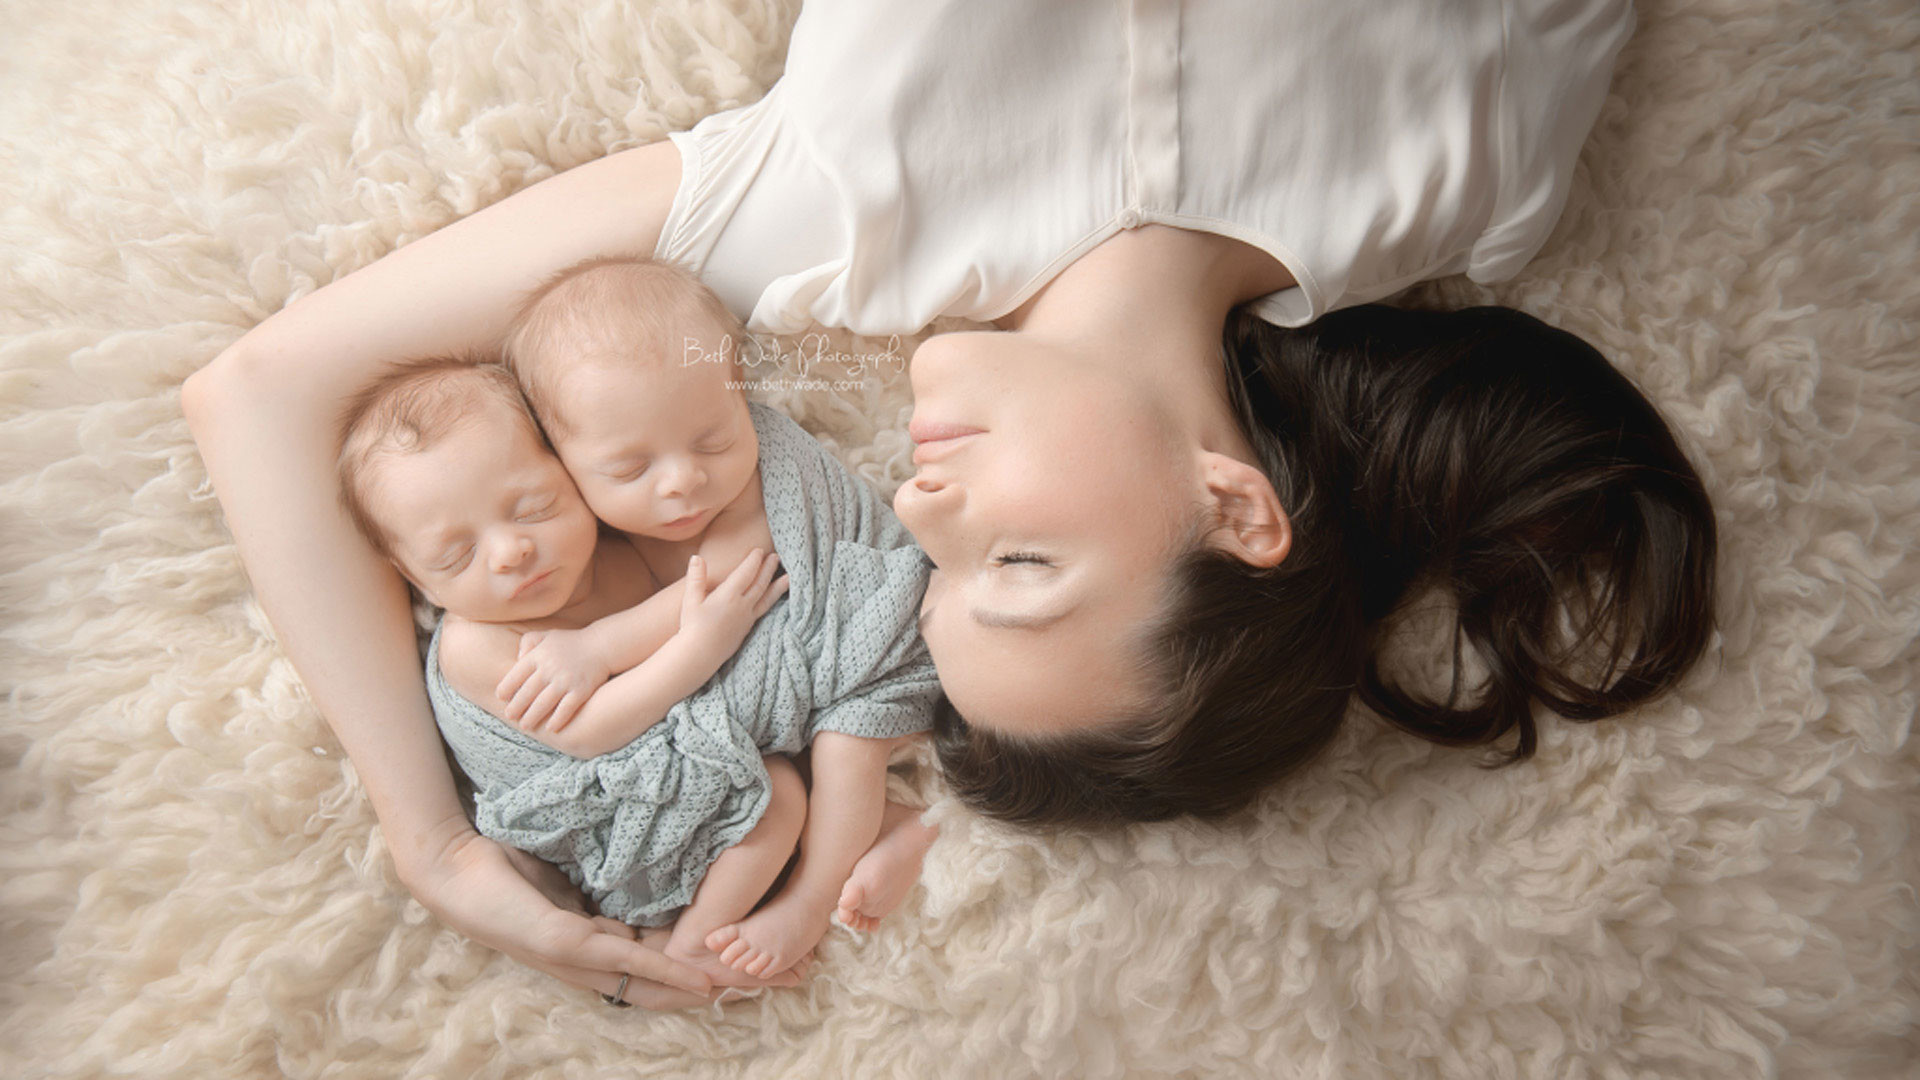 1920x1080 Bella Twins Wallpaper HD - WallpaperSafari BABY TWIN BABIES SLEEPING WITH  MOTHER WALLPAPER (1080p) - HD IMAGE ...